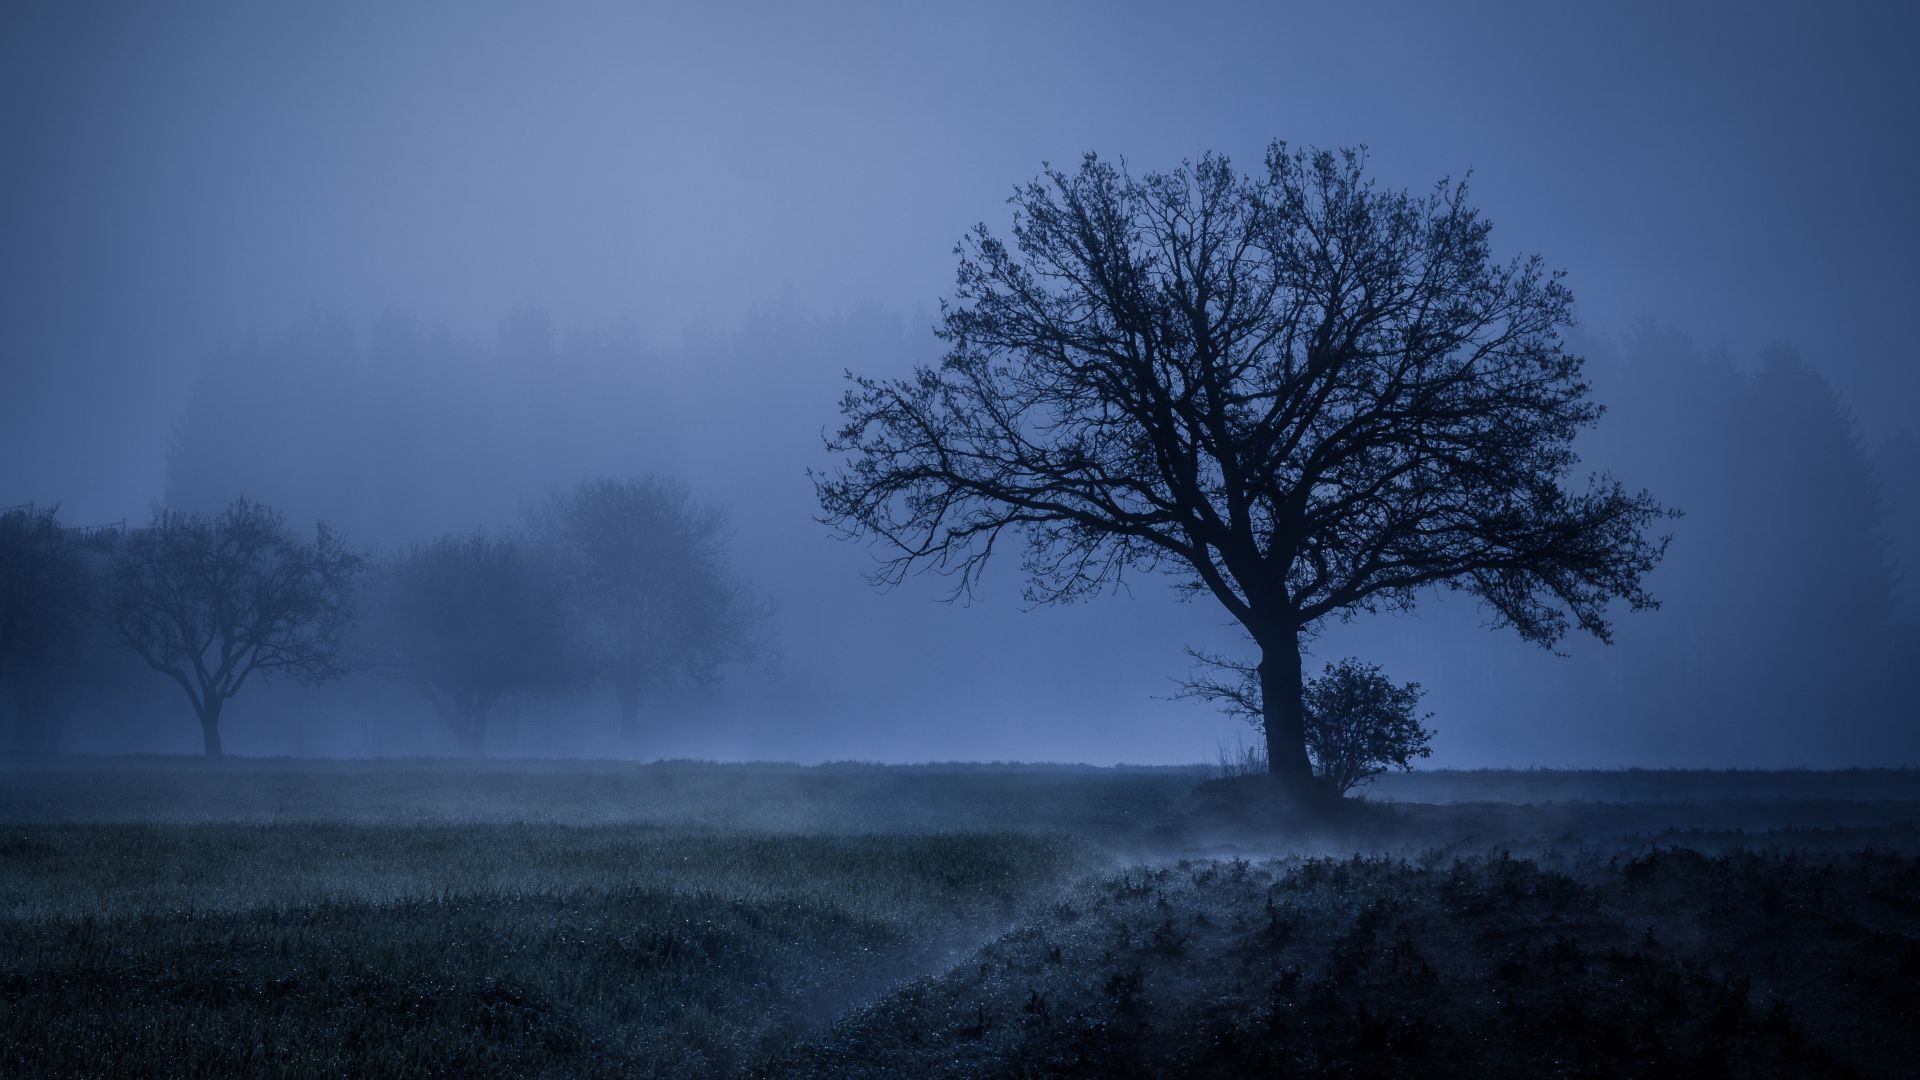 Desktop wallpaper tree fog landscape night autumn k hd image picture background ac